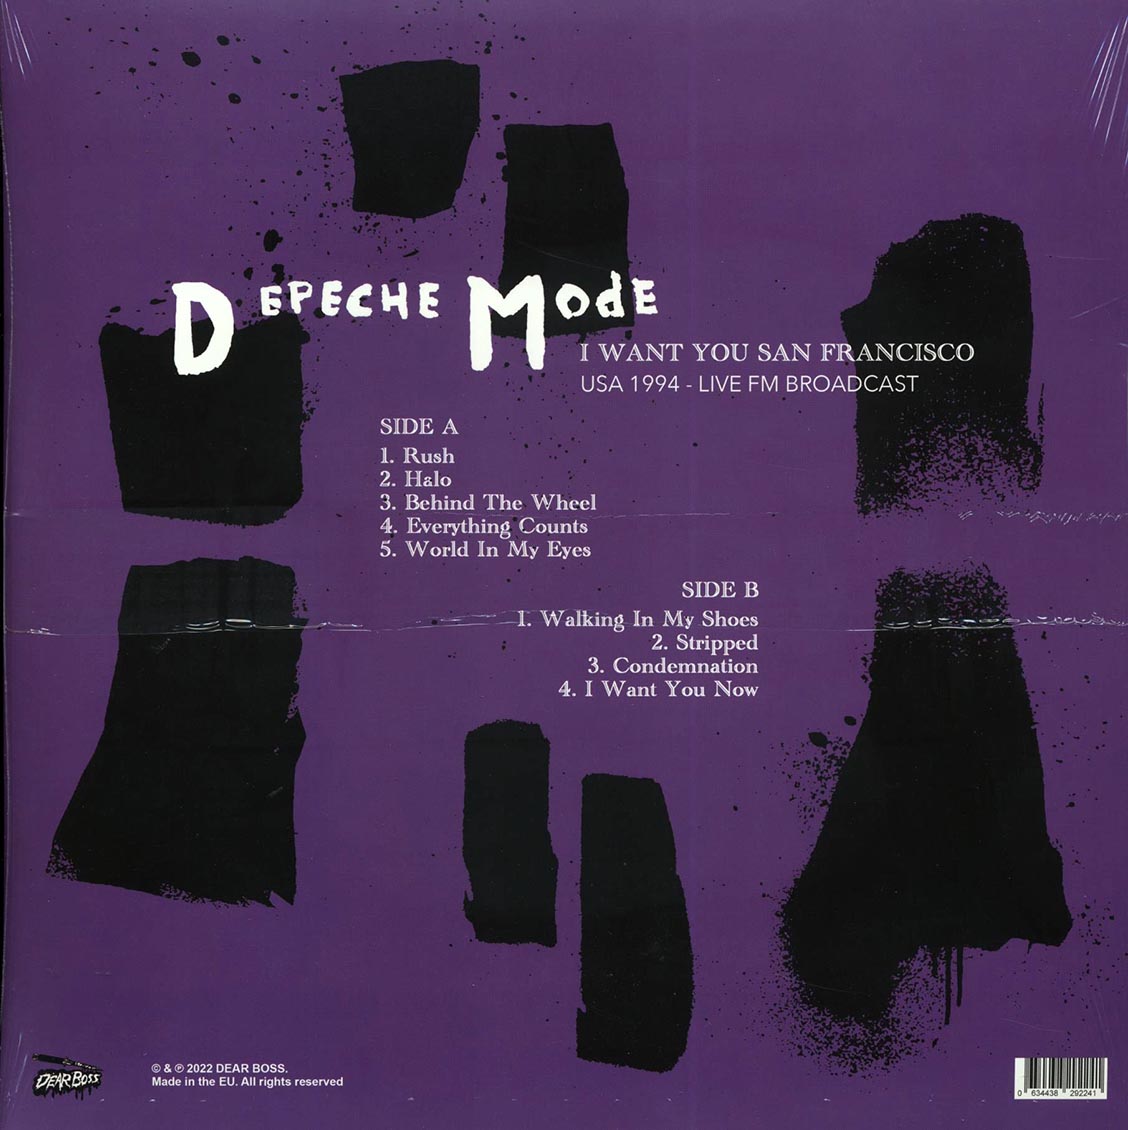 Depeche Mode - I Want You San Francisco: USA 1994 Live FM Broadcast (ltd. 300 copies made) (colored vinyl) - Vinyl LP, LP